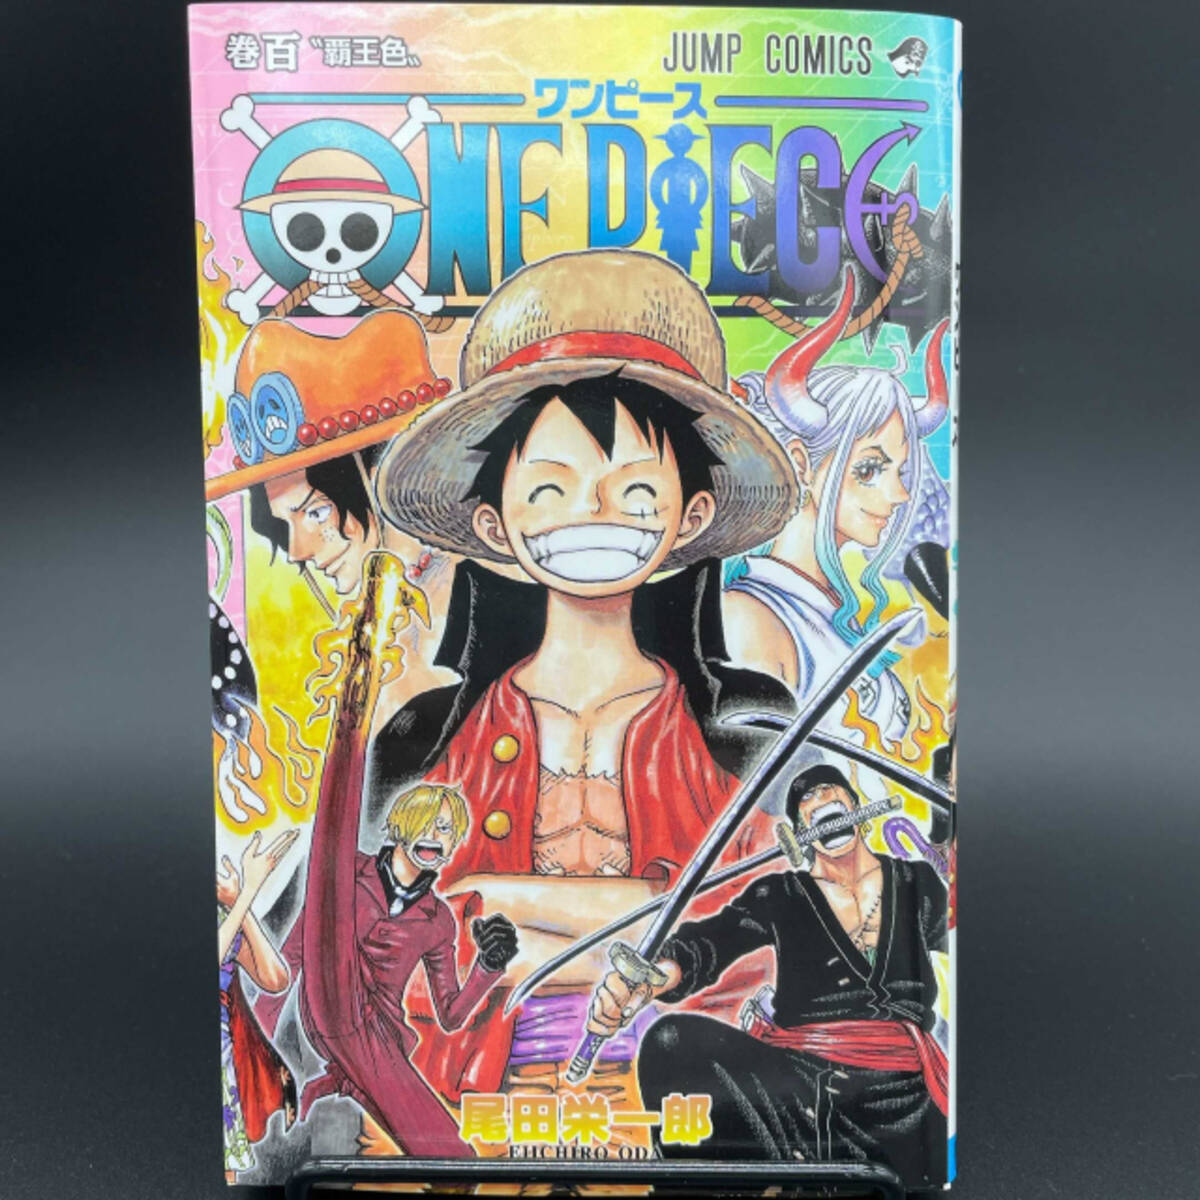 One Piece ヤマトが 10人目の仲間 で確定 ニオわせの数々に期待の声 21年9月8日 エキサイトニュース